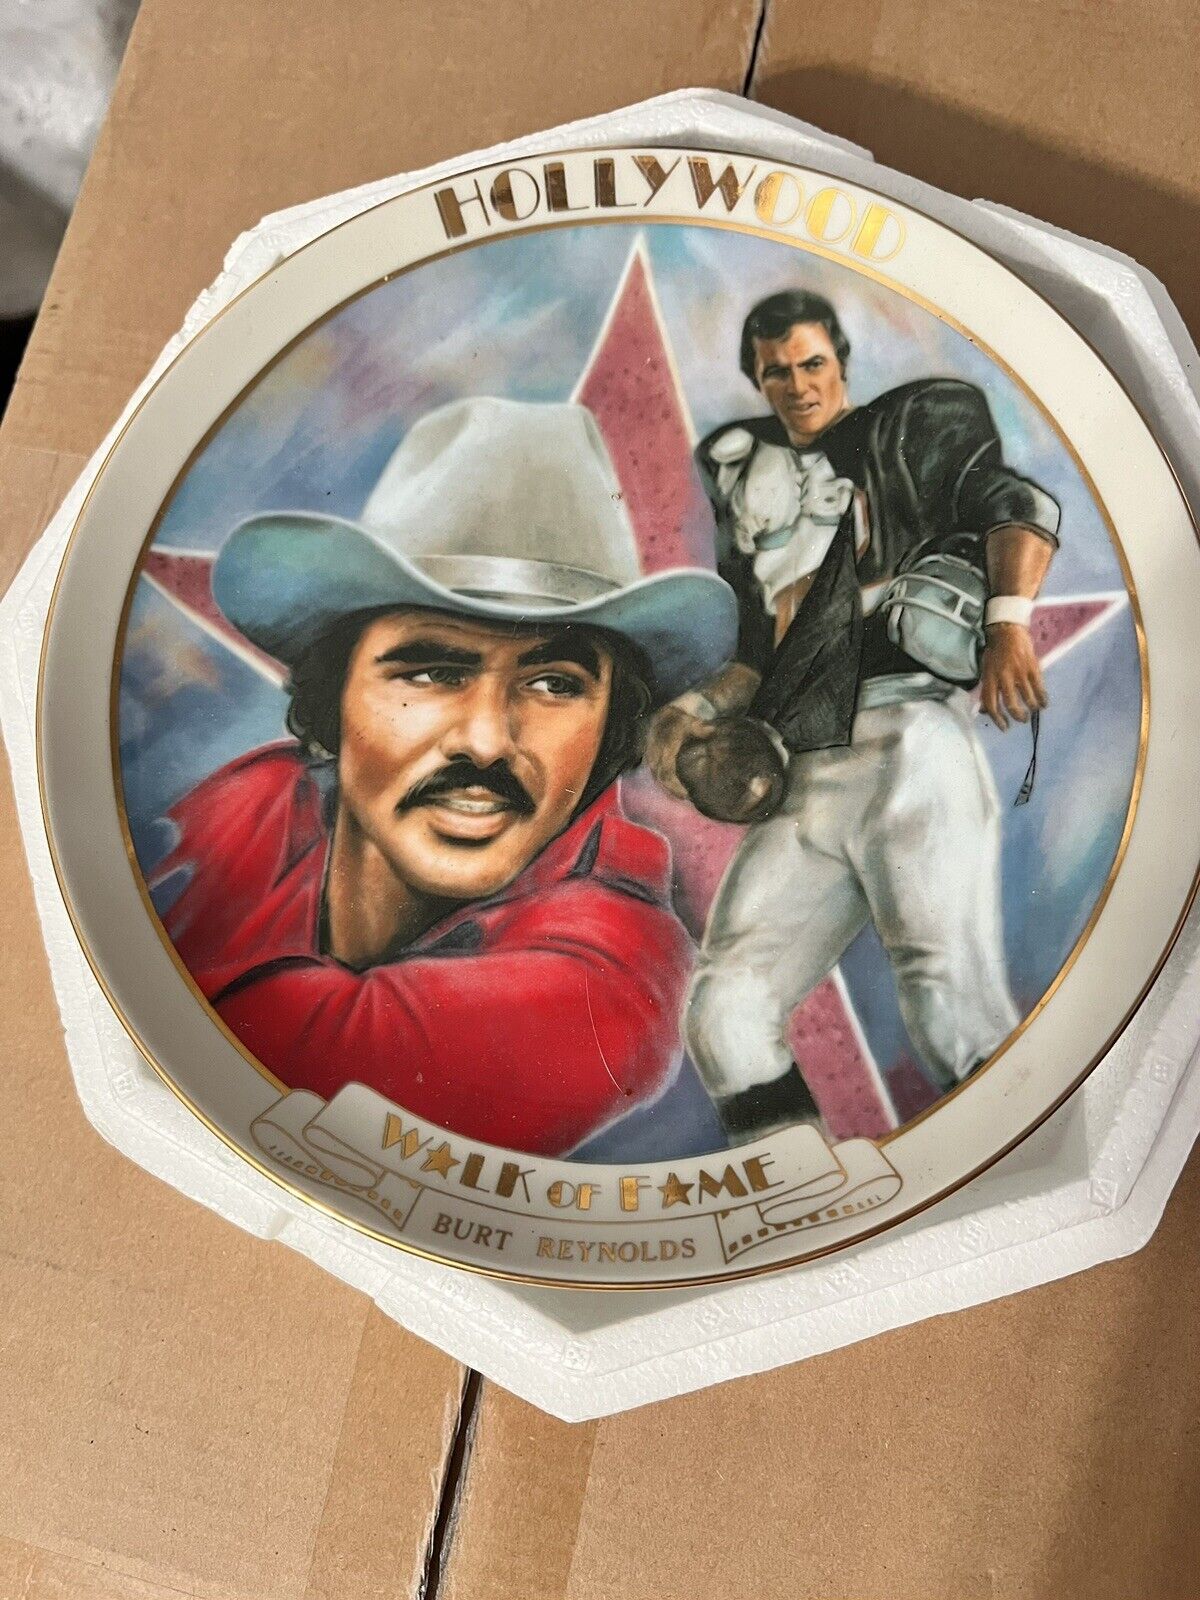 Burt Reynolds “Hollywood Walk Of Fame” Collector’s Plate